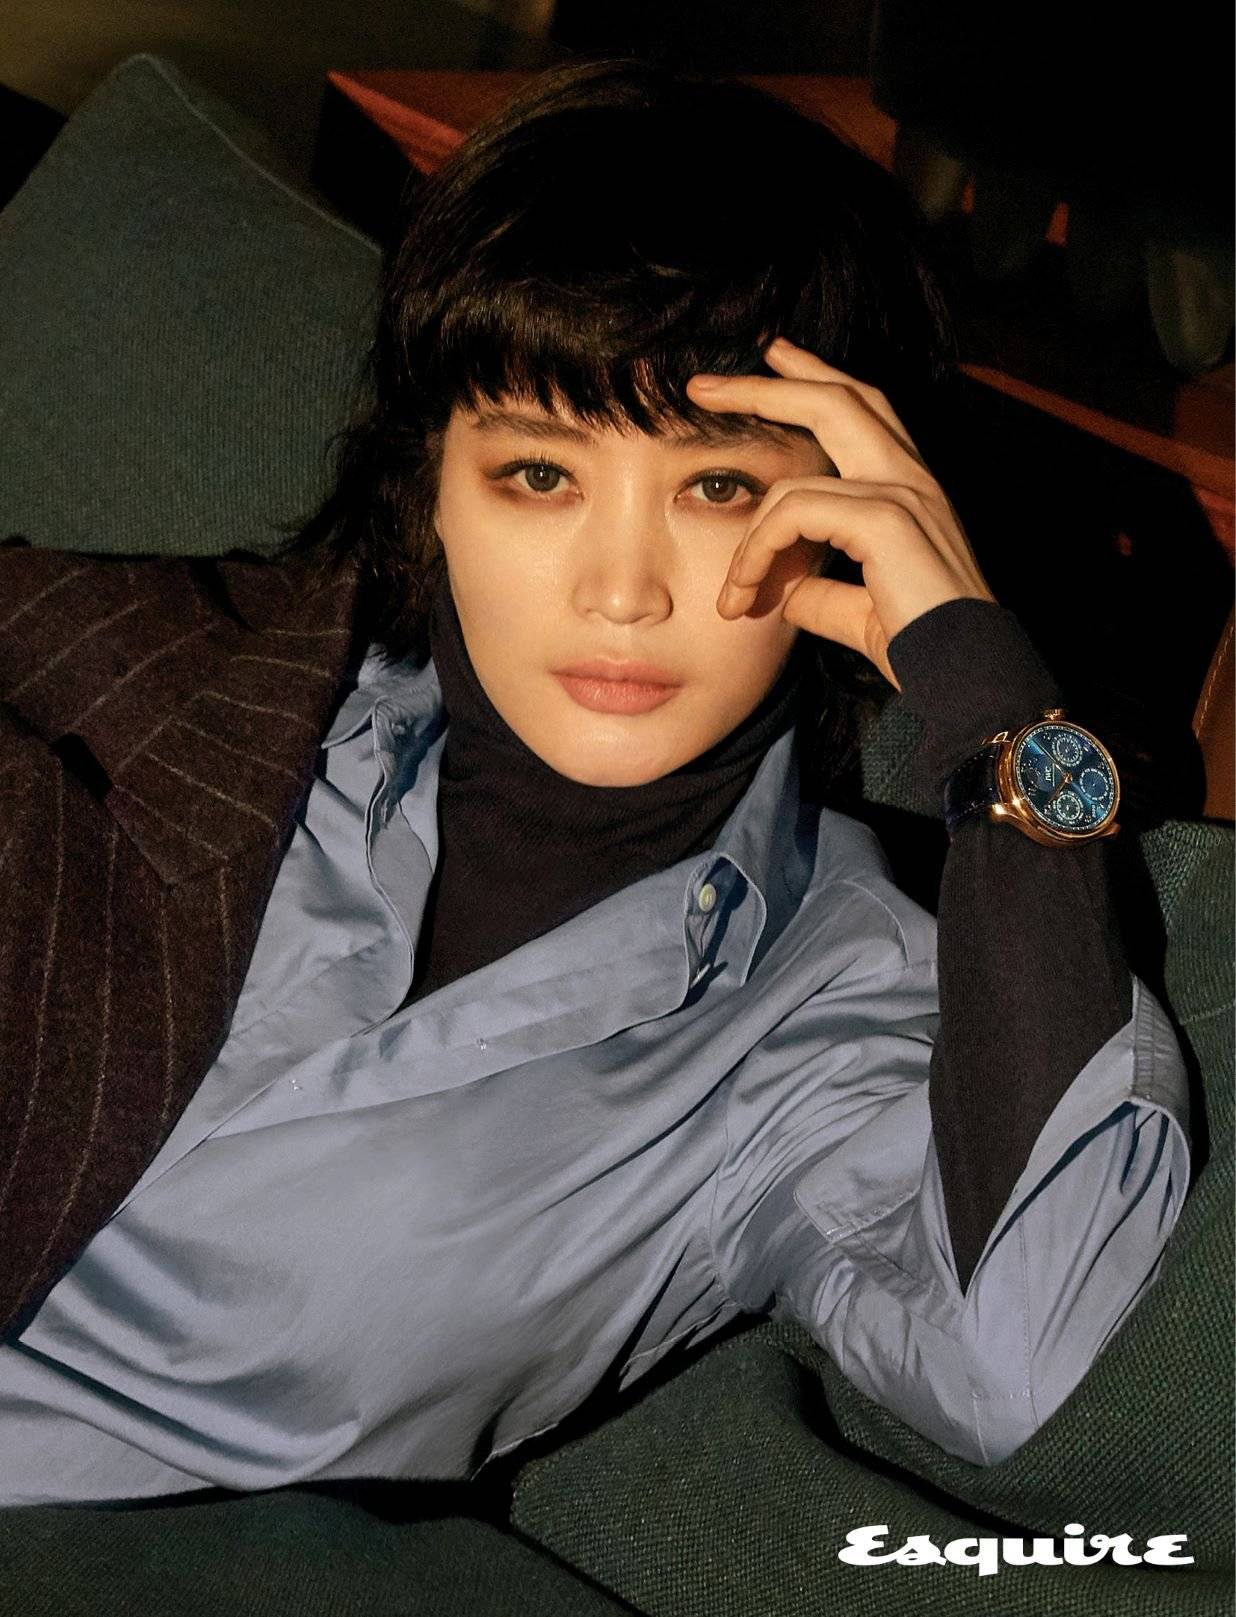 Kim Hye Soo Picture Gallery Hancinema The Korean Movie And Drama Database